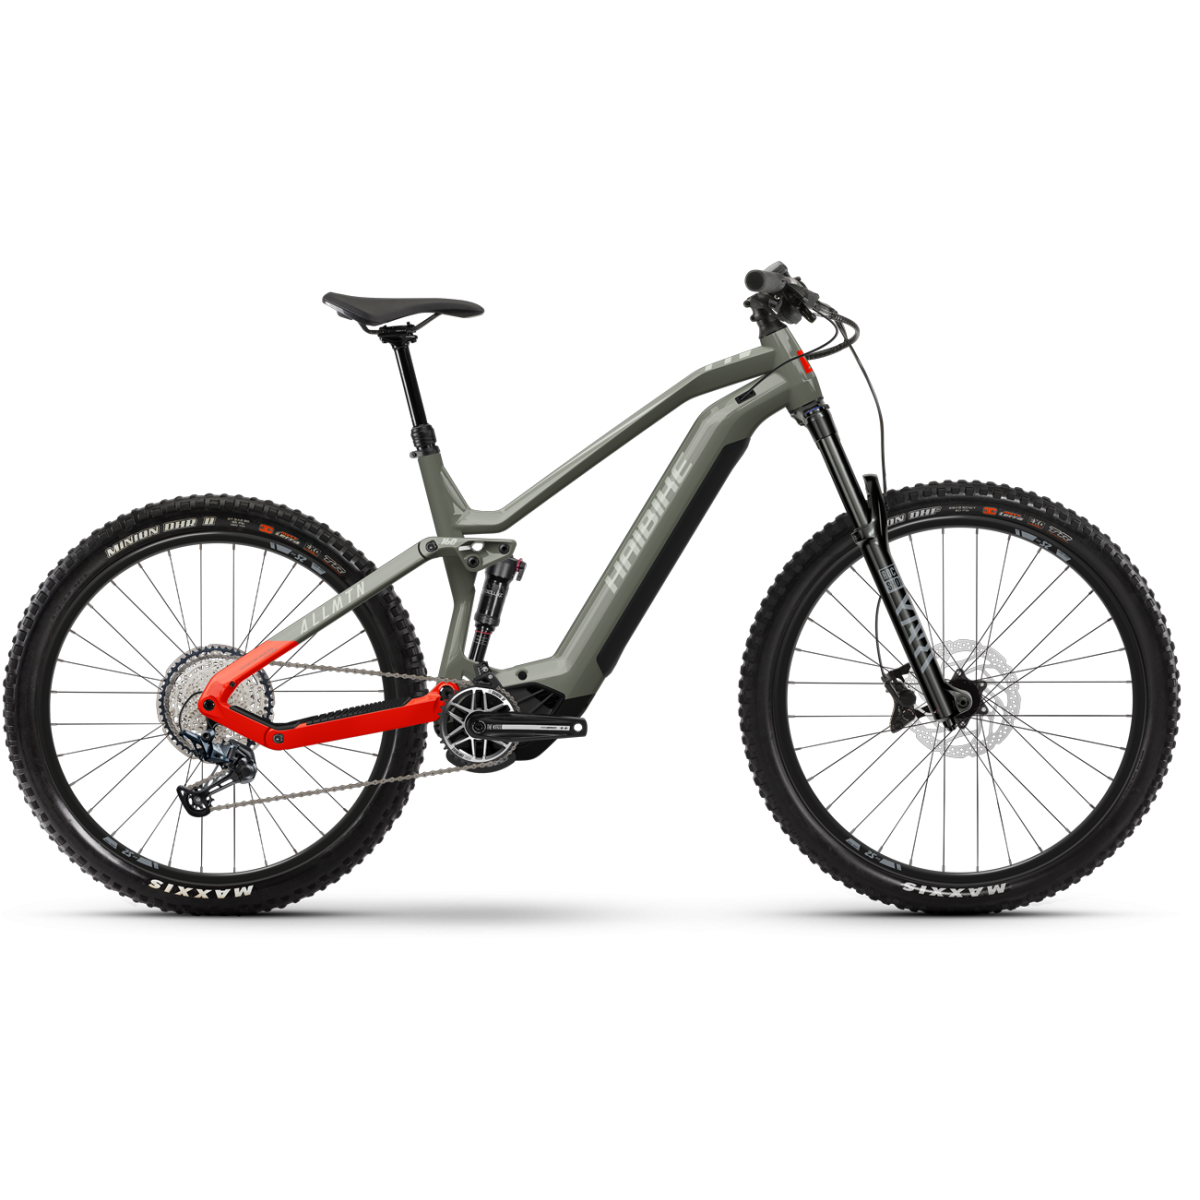 Bicicleta eléctrica de enduro mtb Haibike AllMtn 4 |720Wh motor yamaha color gris | outlet | barata